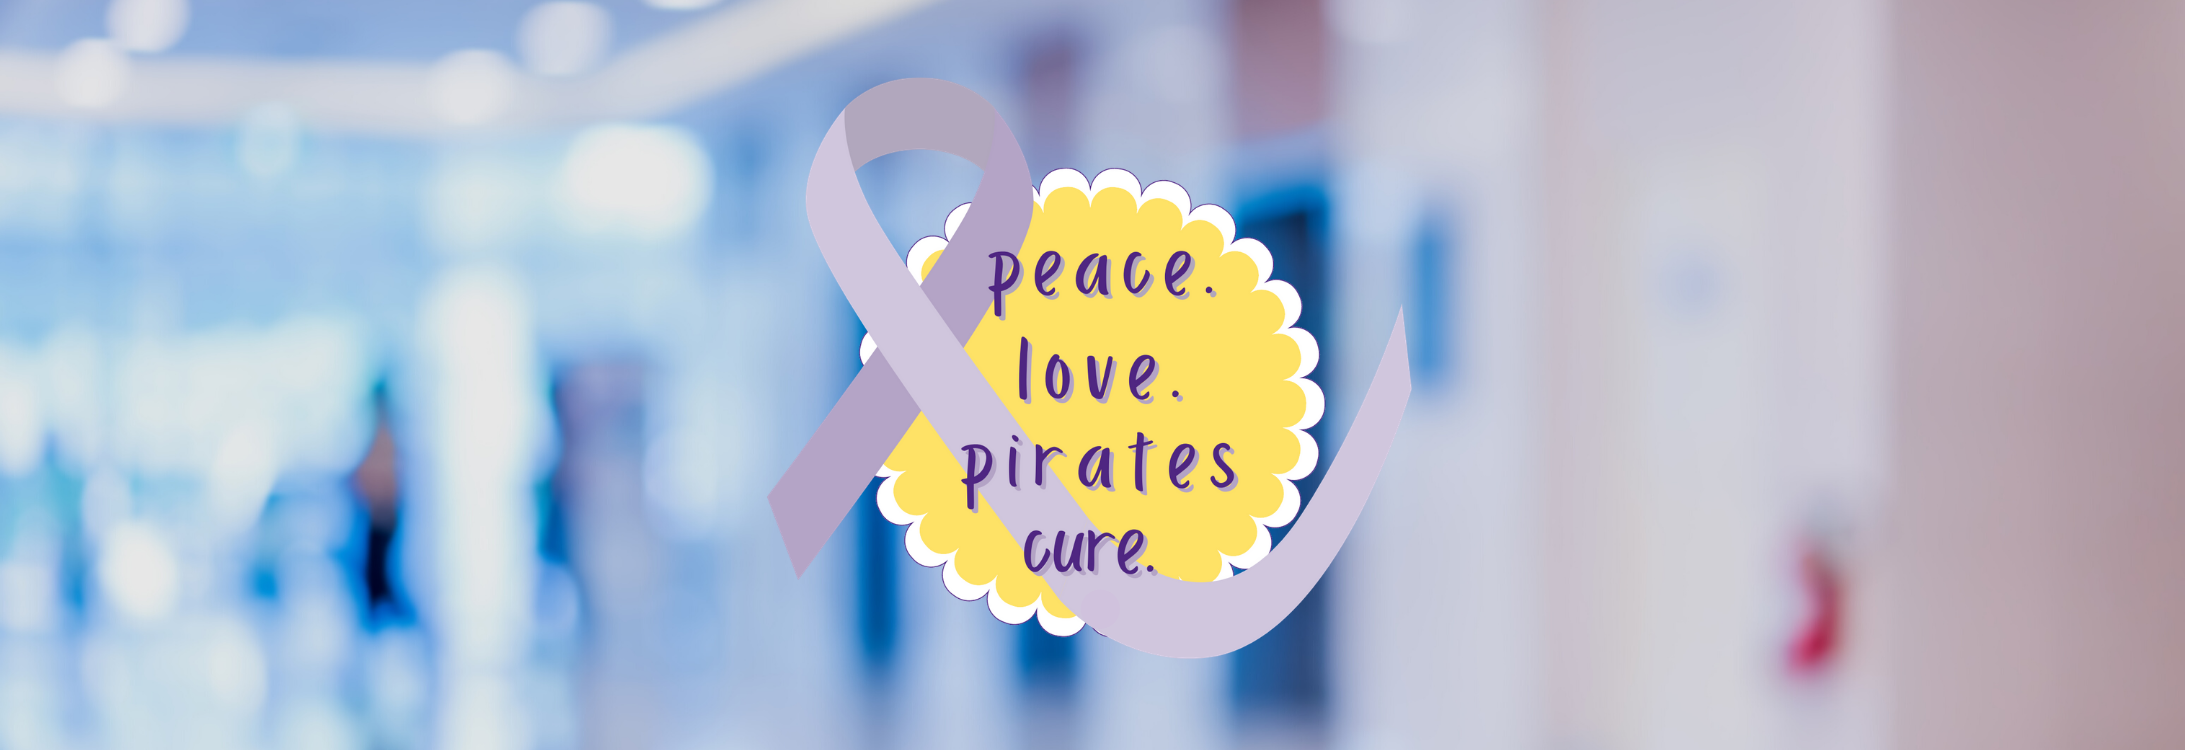 Peace. Love. Pirates. Cure.